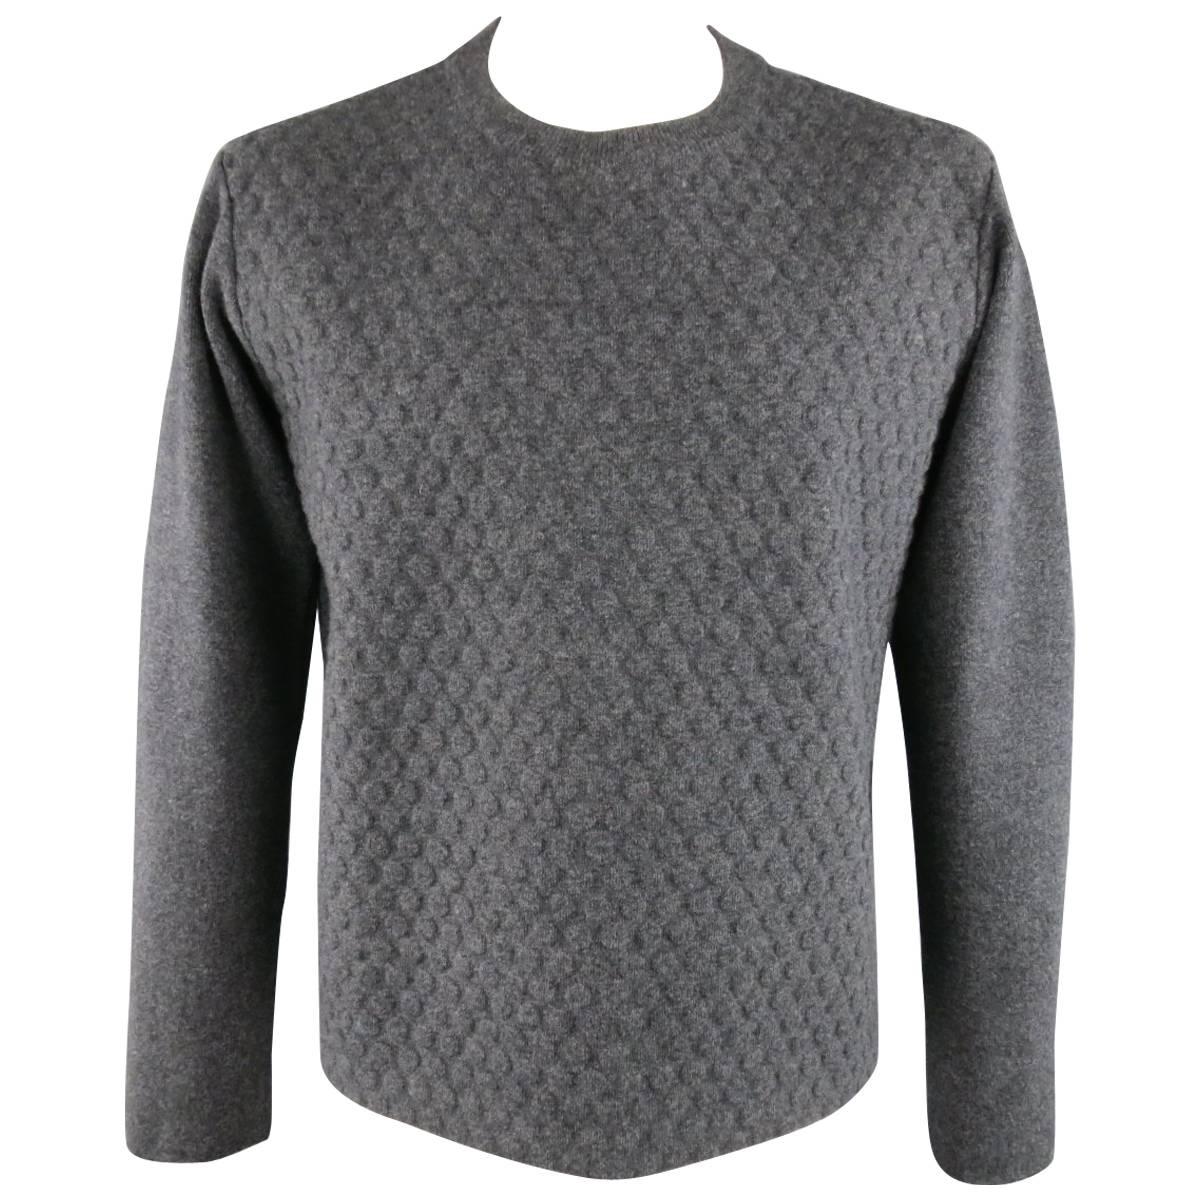 Men's JIL SANDER Sweater - Heather Gray Textured Wool / Cashmere Pullover